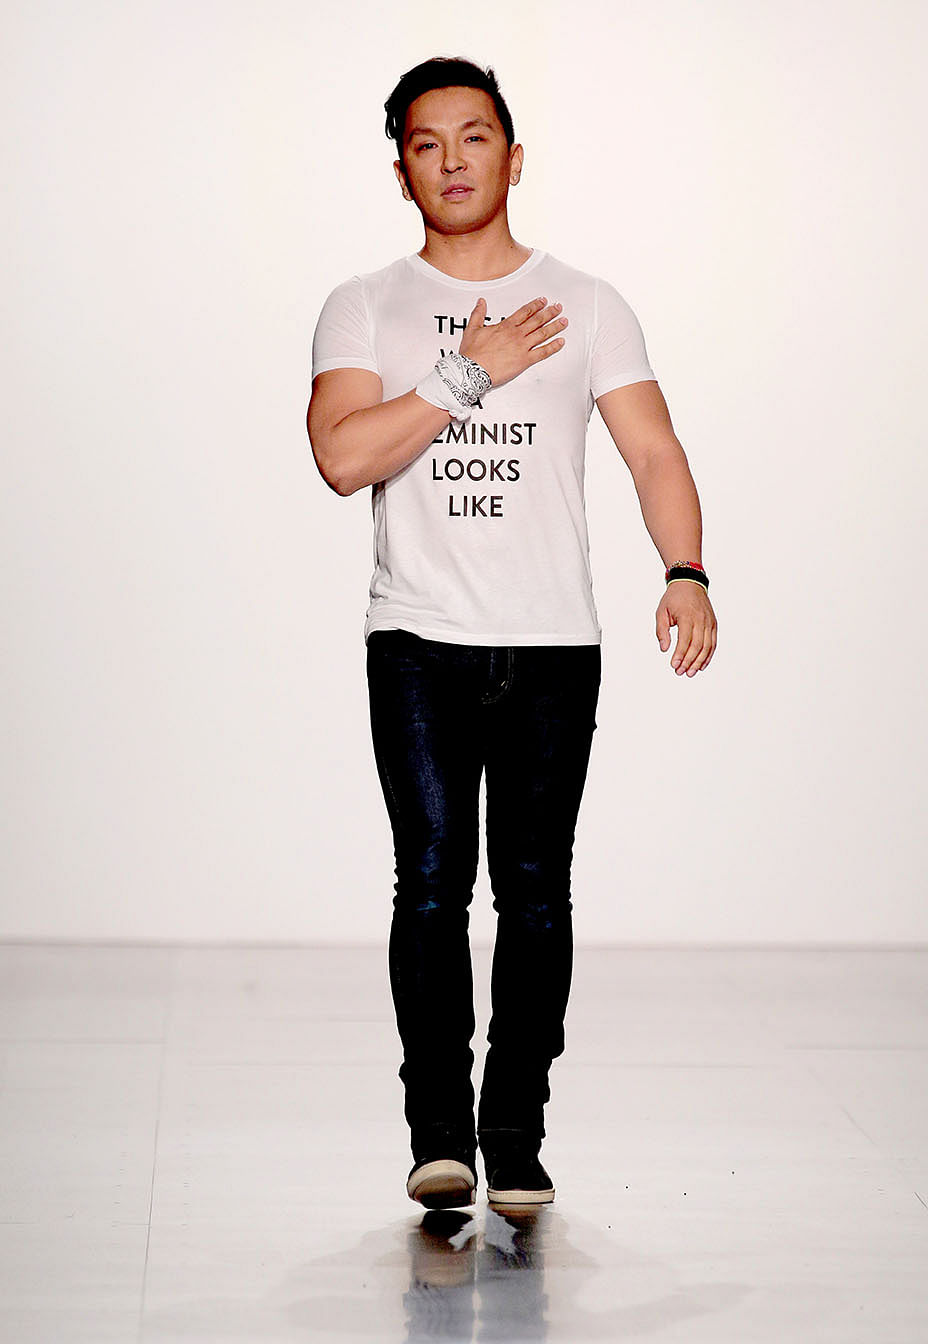 

Nepal-born American designer Prabal Gurung sashayed his models down the ramp in T-shirts with feminist slogans.